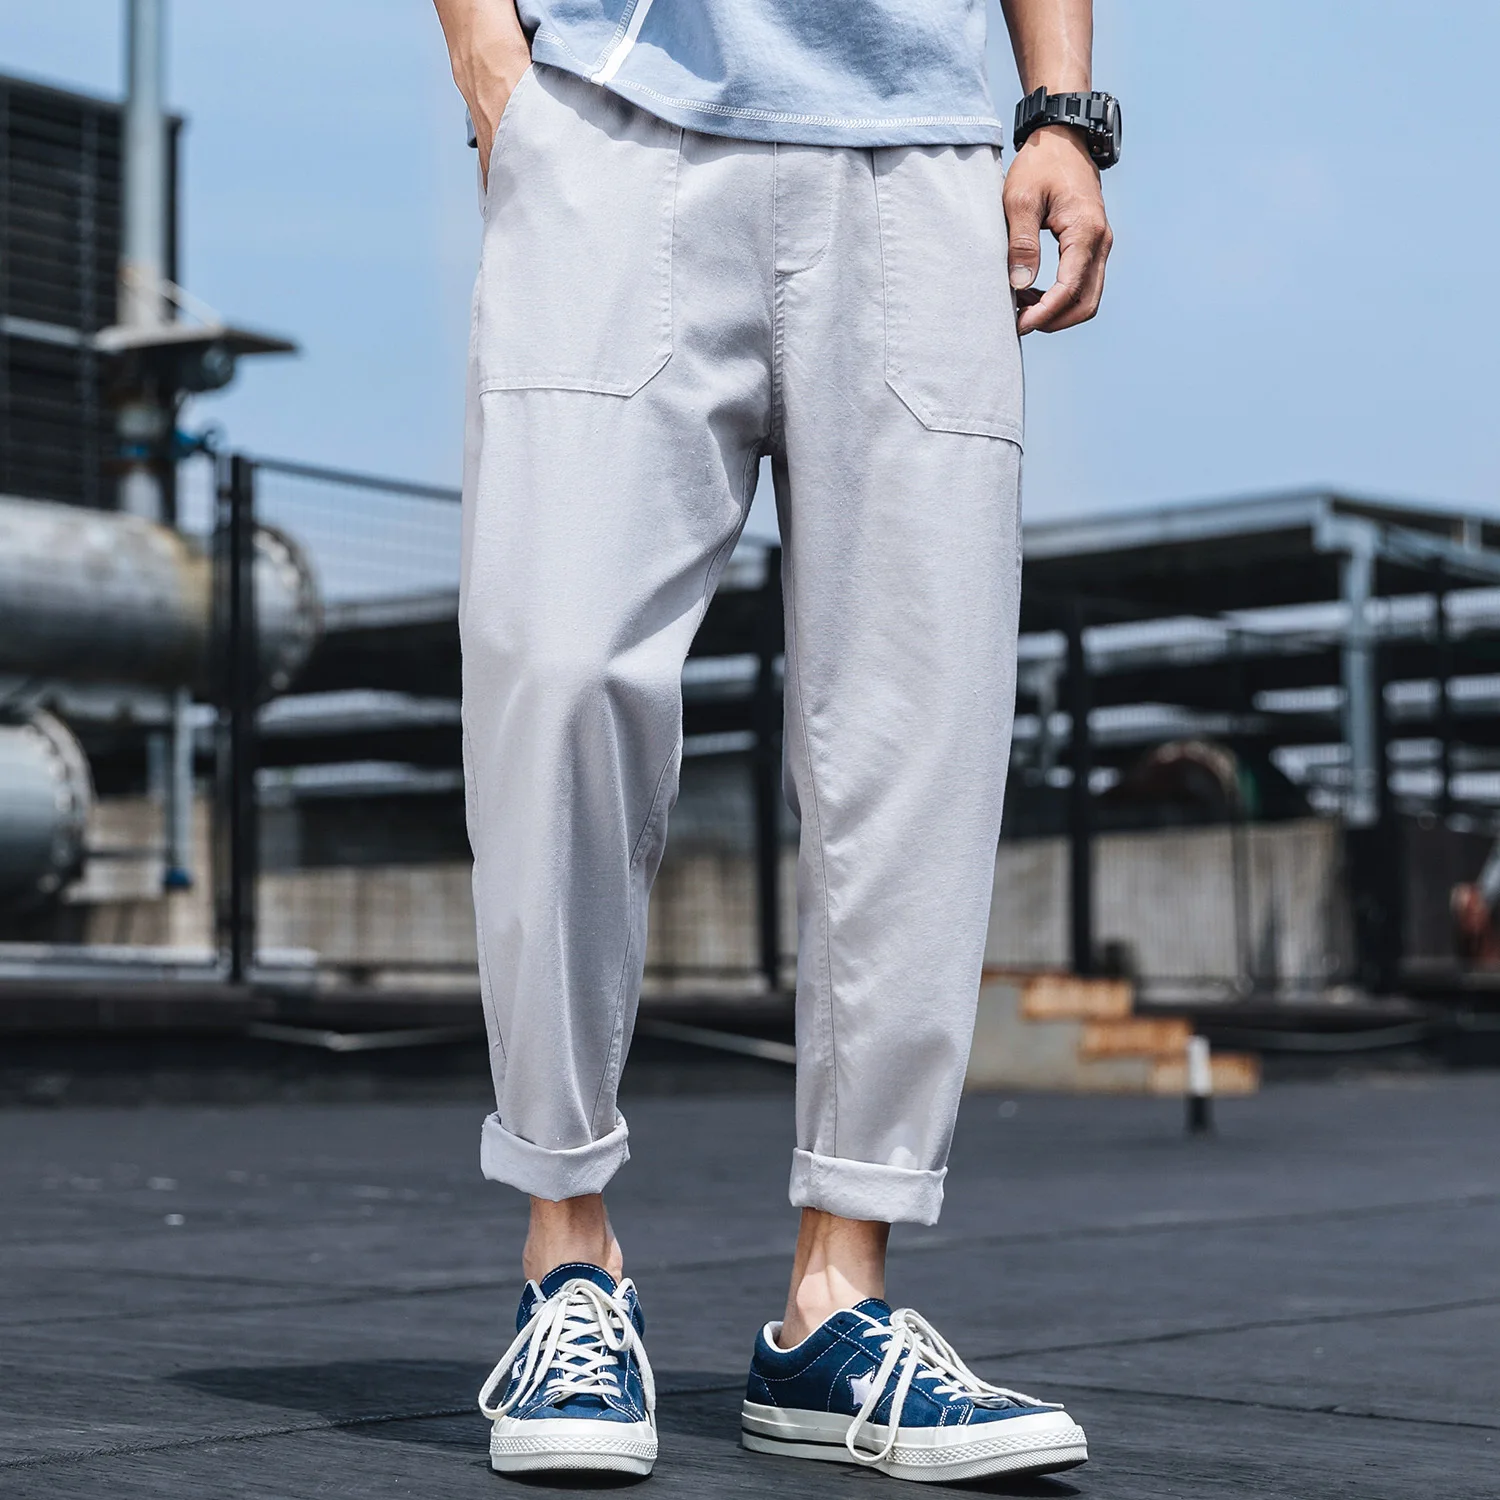 2019 Summer Men's Fashion Trend Haren Pants Youth Cotton Casual Wash Bound Feet Khaki/grey/black Trousers M-5XL | Мужская одежда